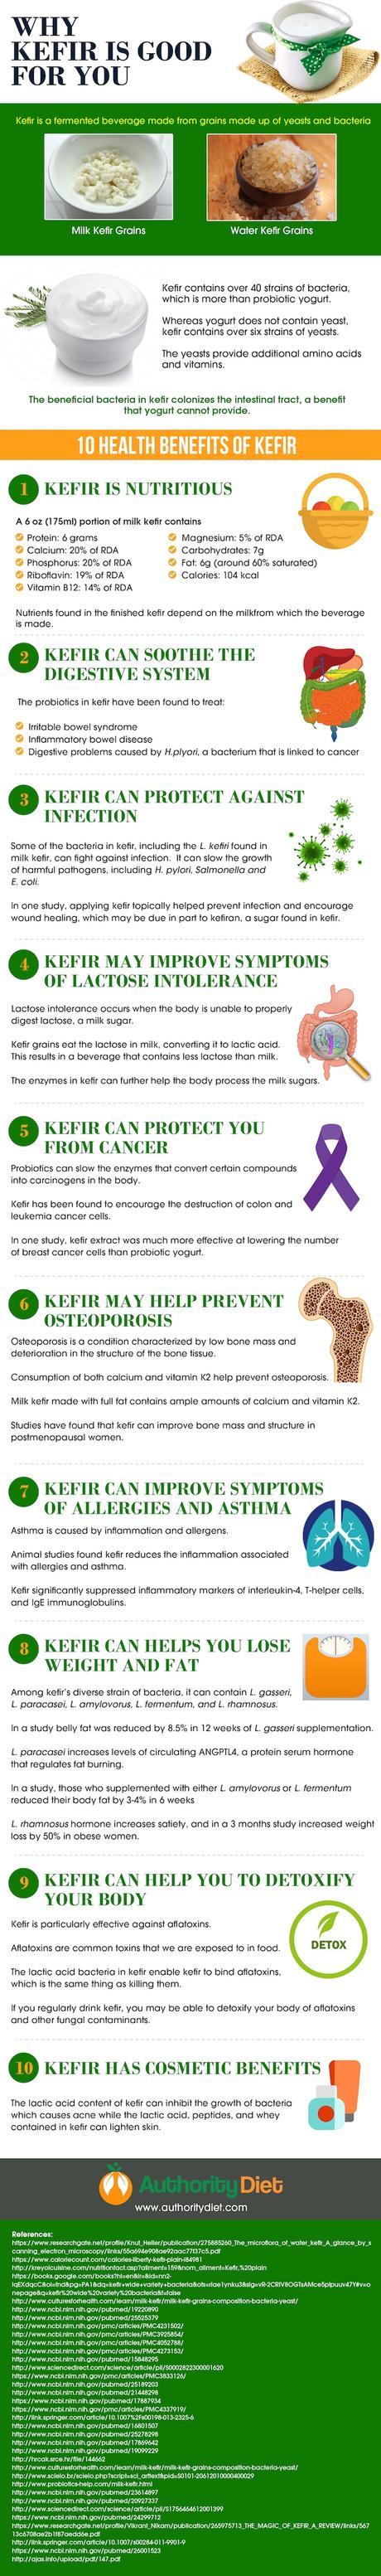 Kefir Health Benefits Infographic